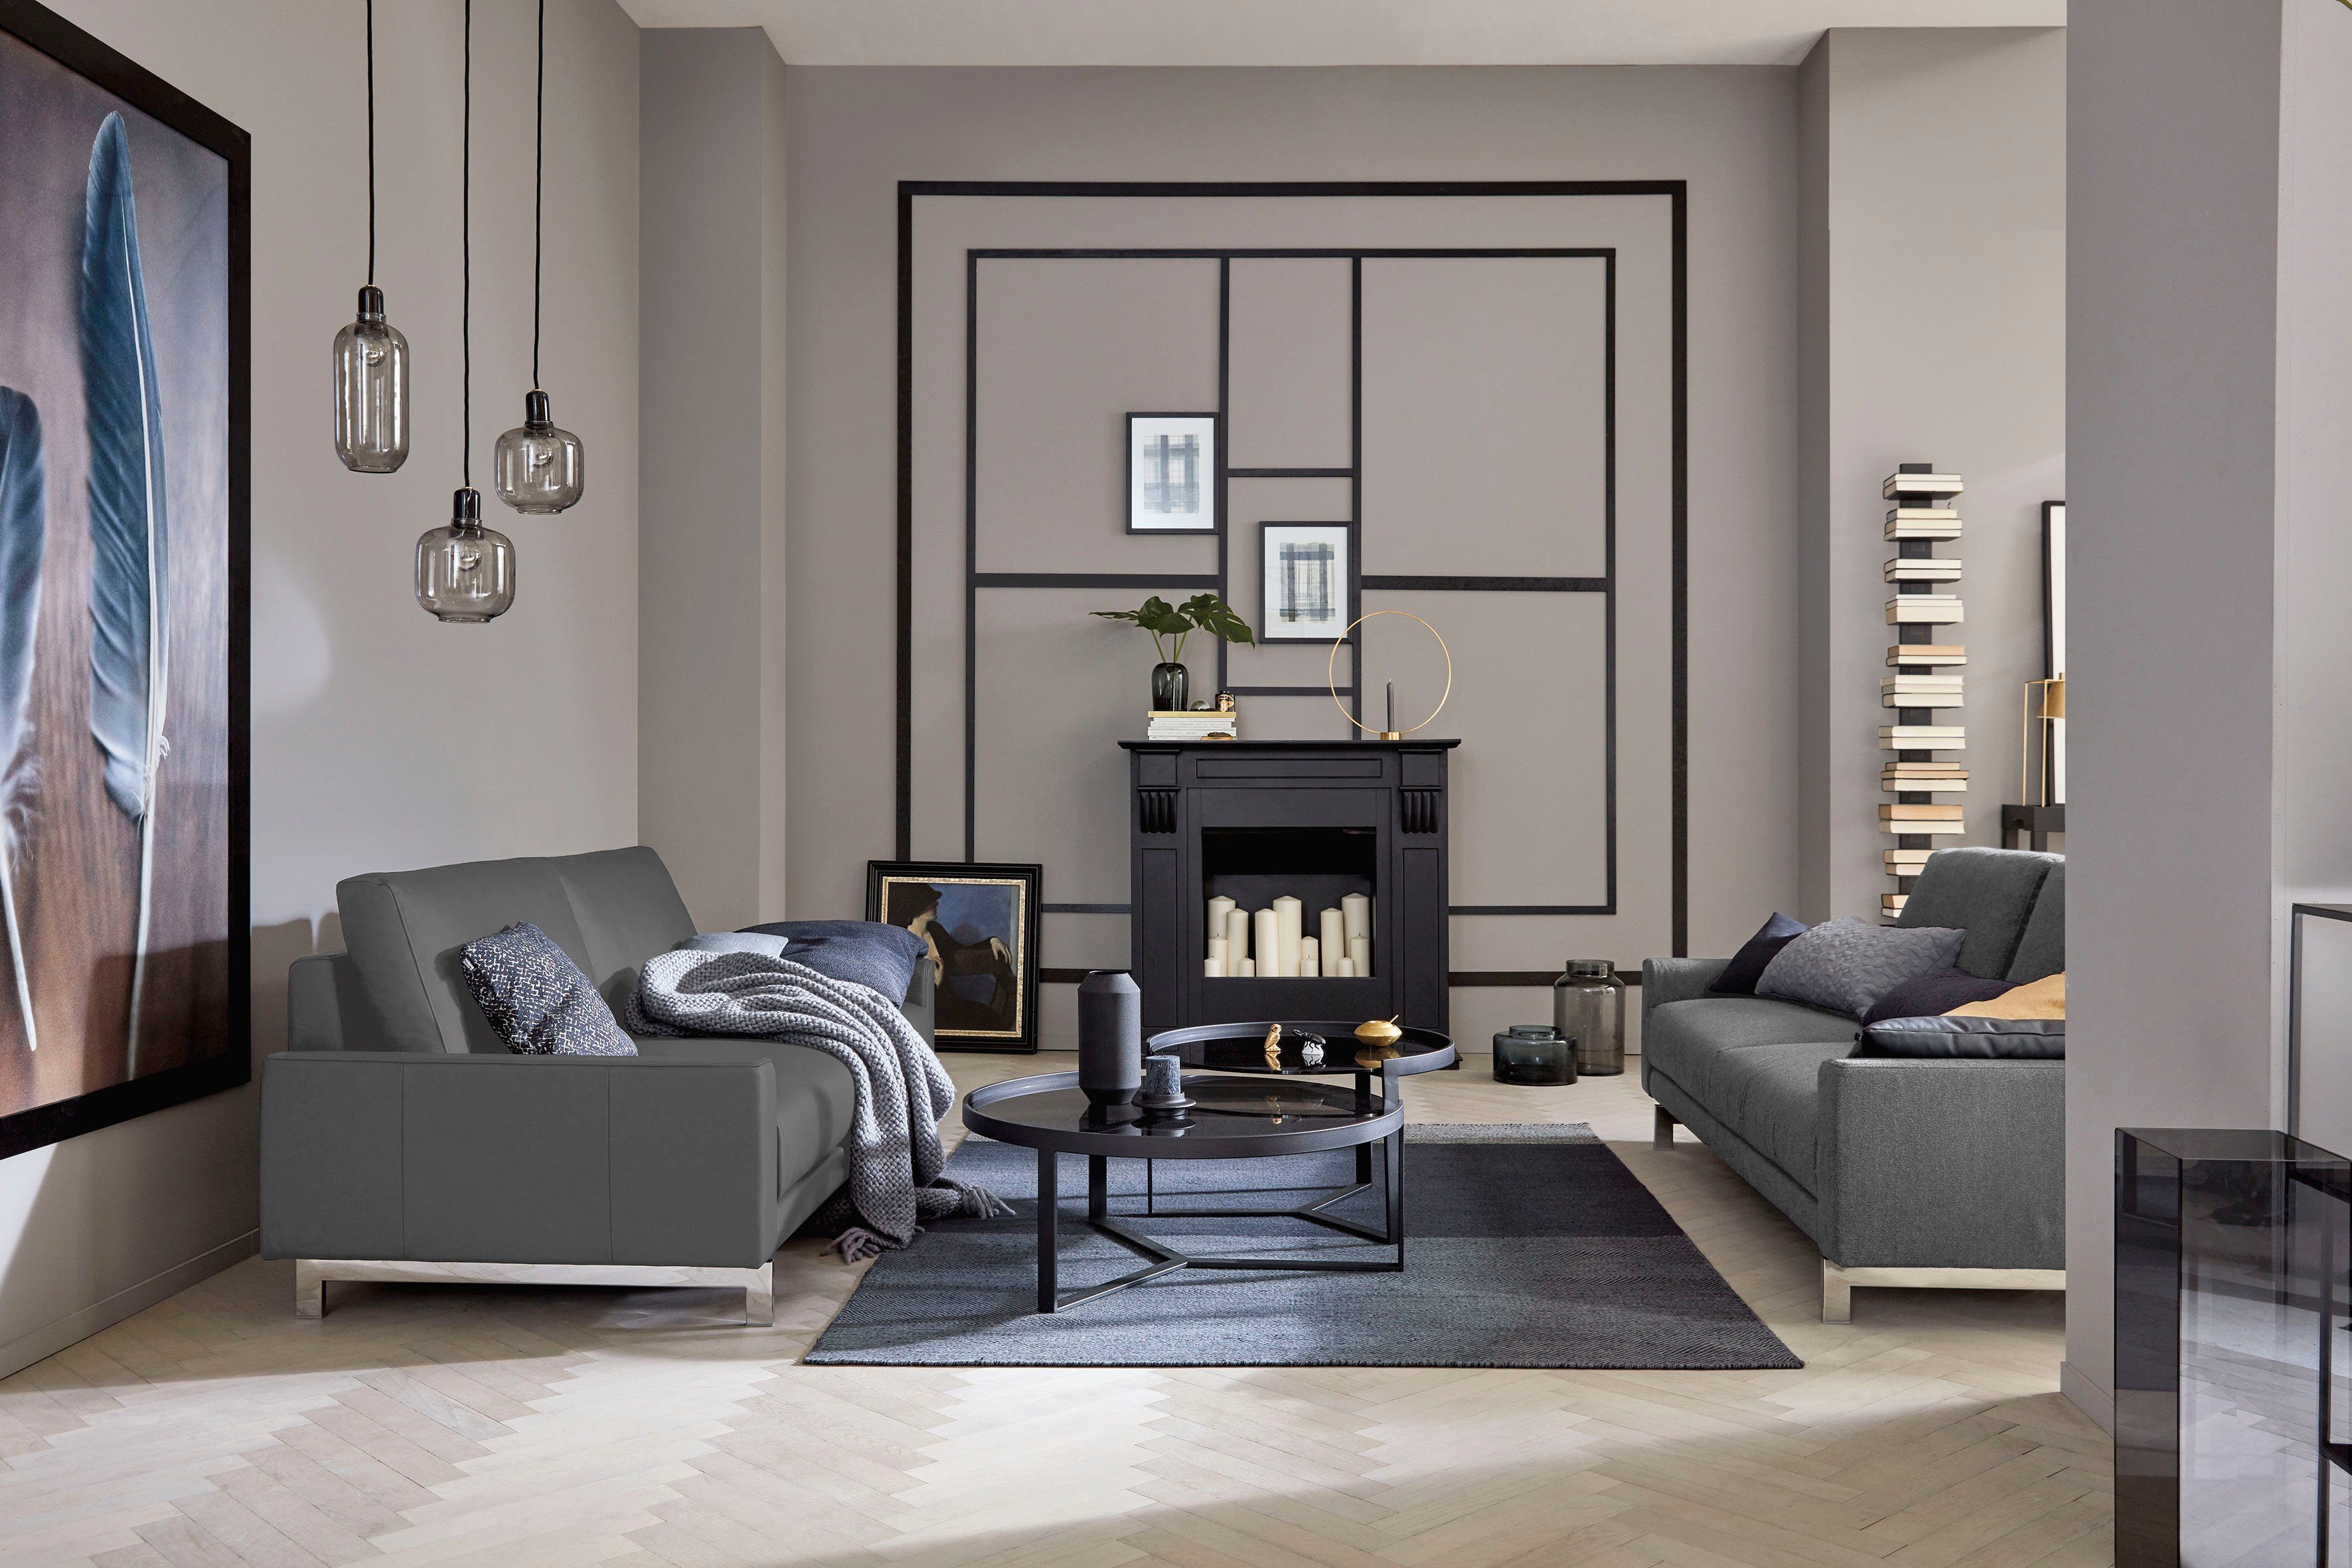 chromfarben niedrig, glänzend, 204 cm 3-Sitzer hs.450, Fuß hülsta Armlehne Breite sofa